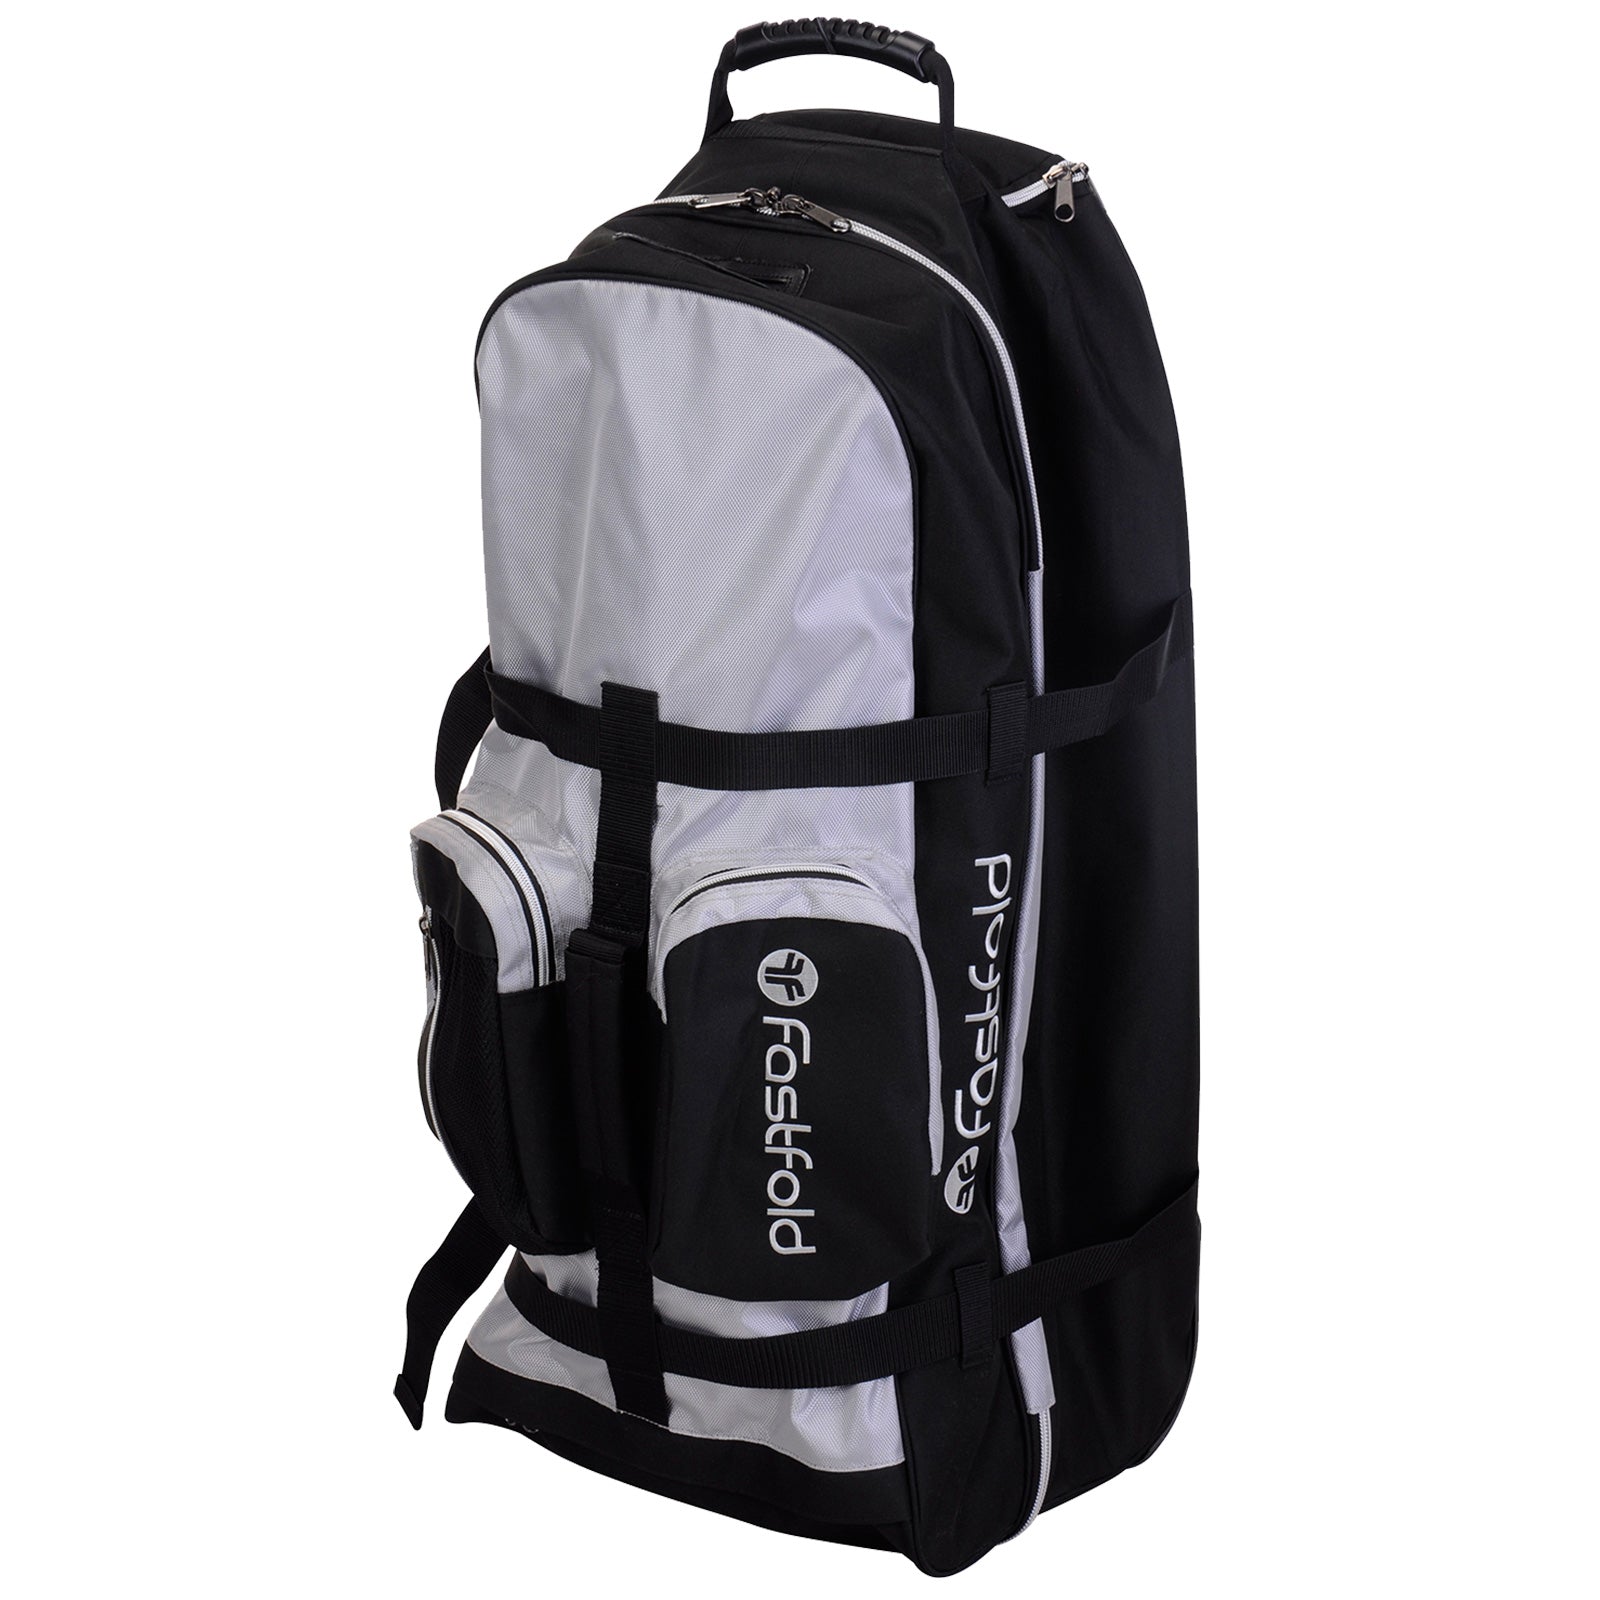 FastFold Wheeled Travel Bag